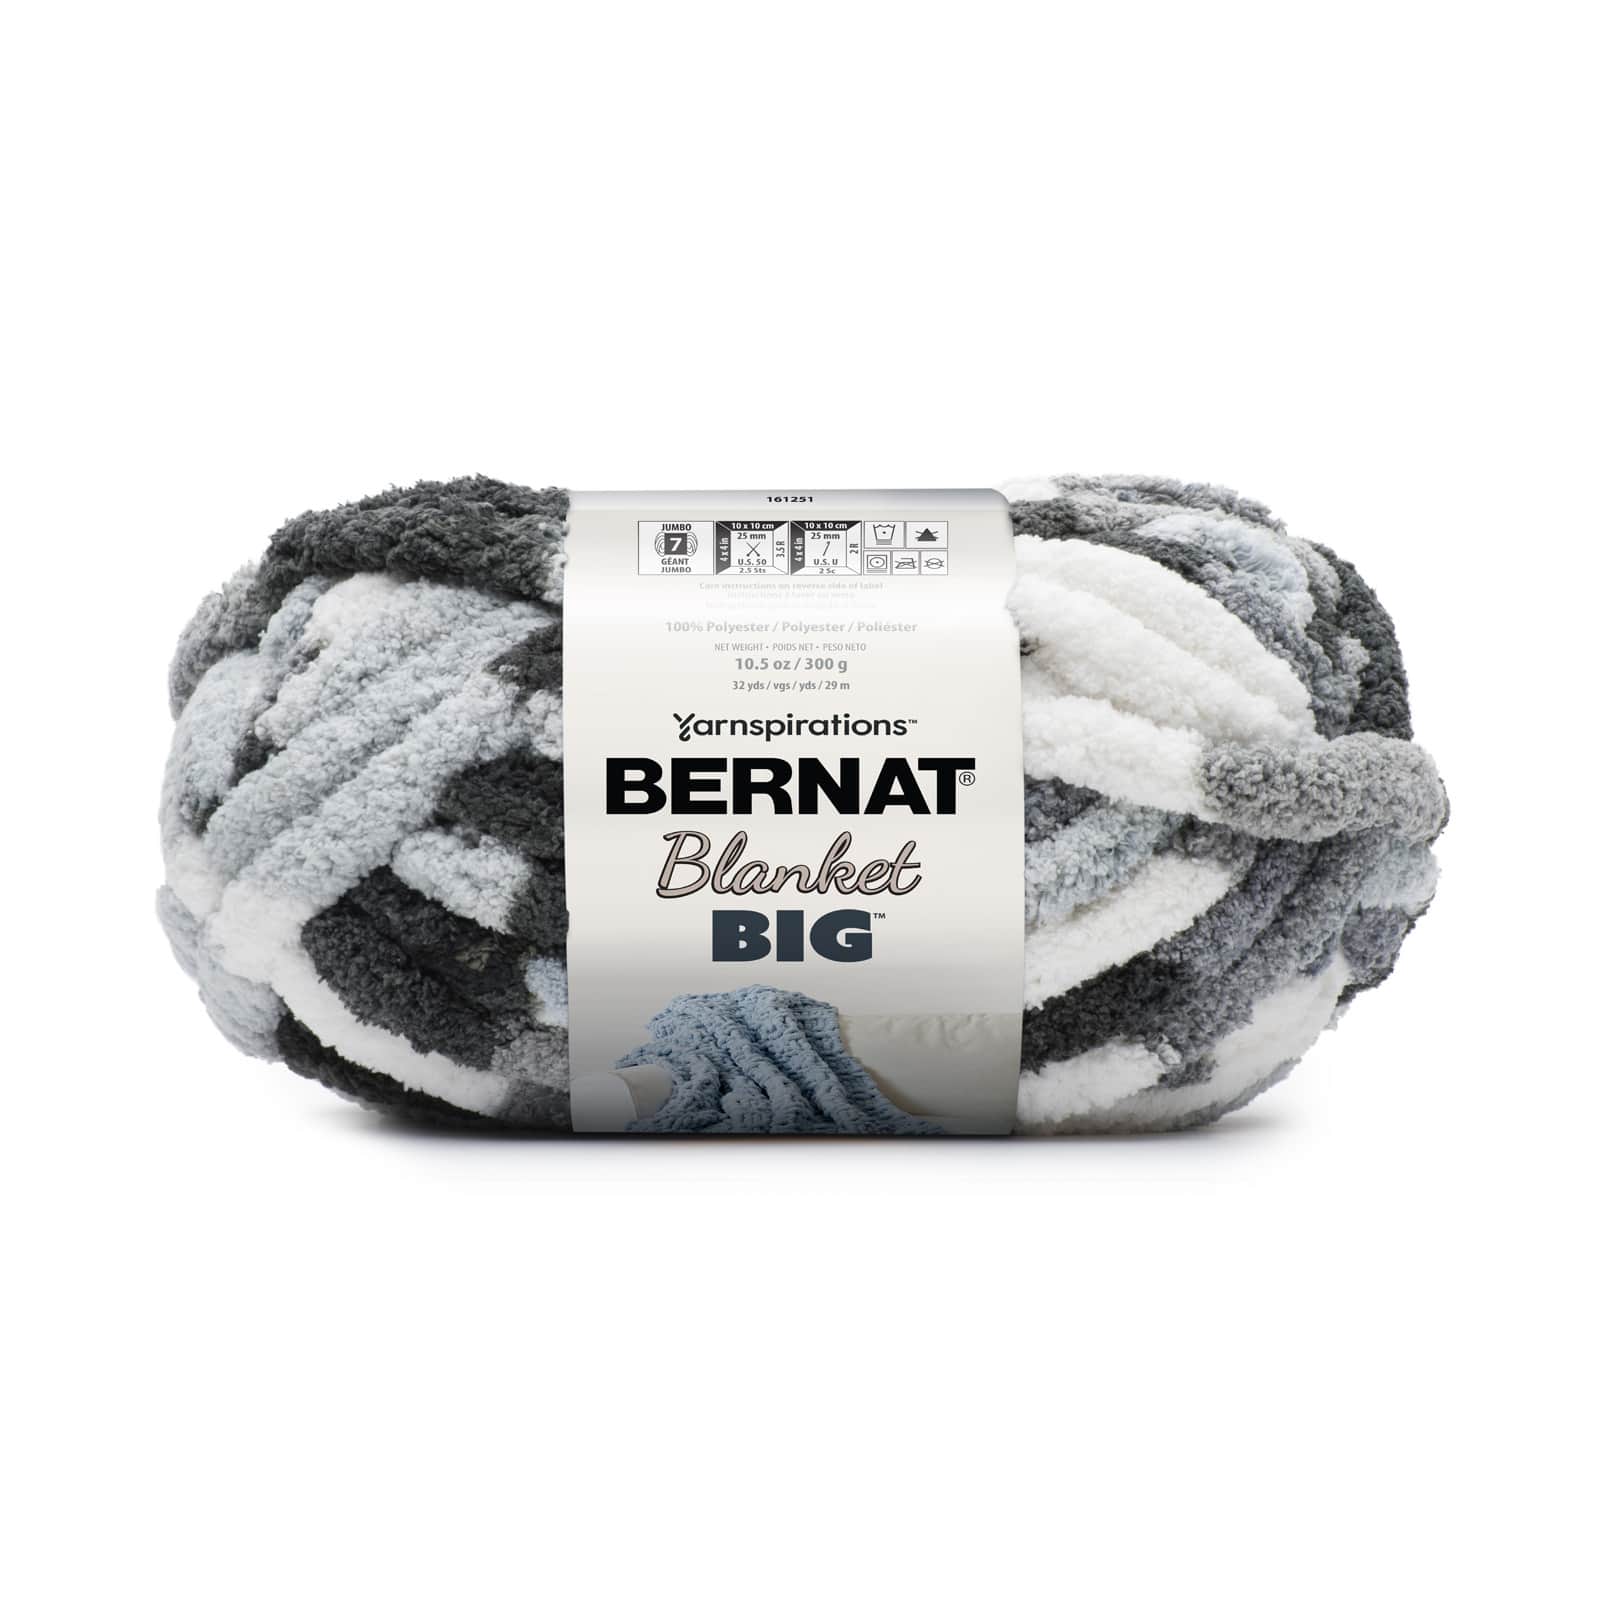  BERNAT Blanket 'Big', Cold Sea, 300g